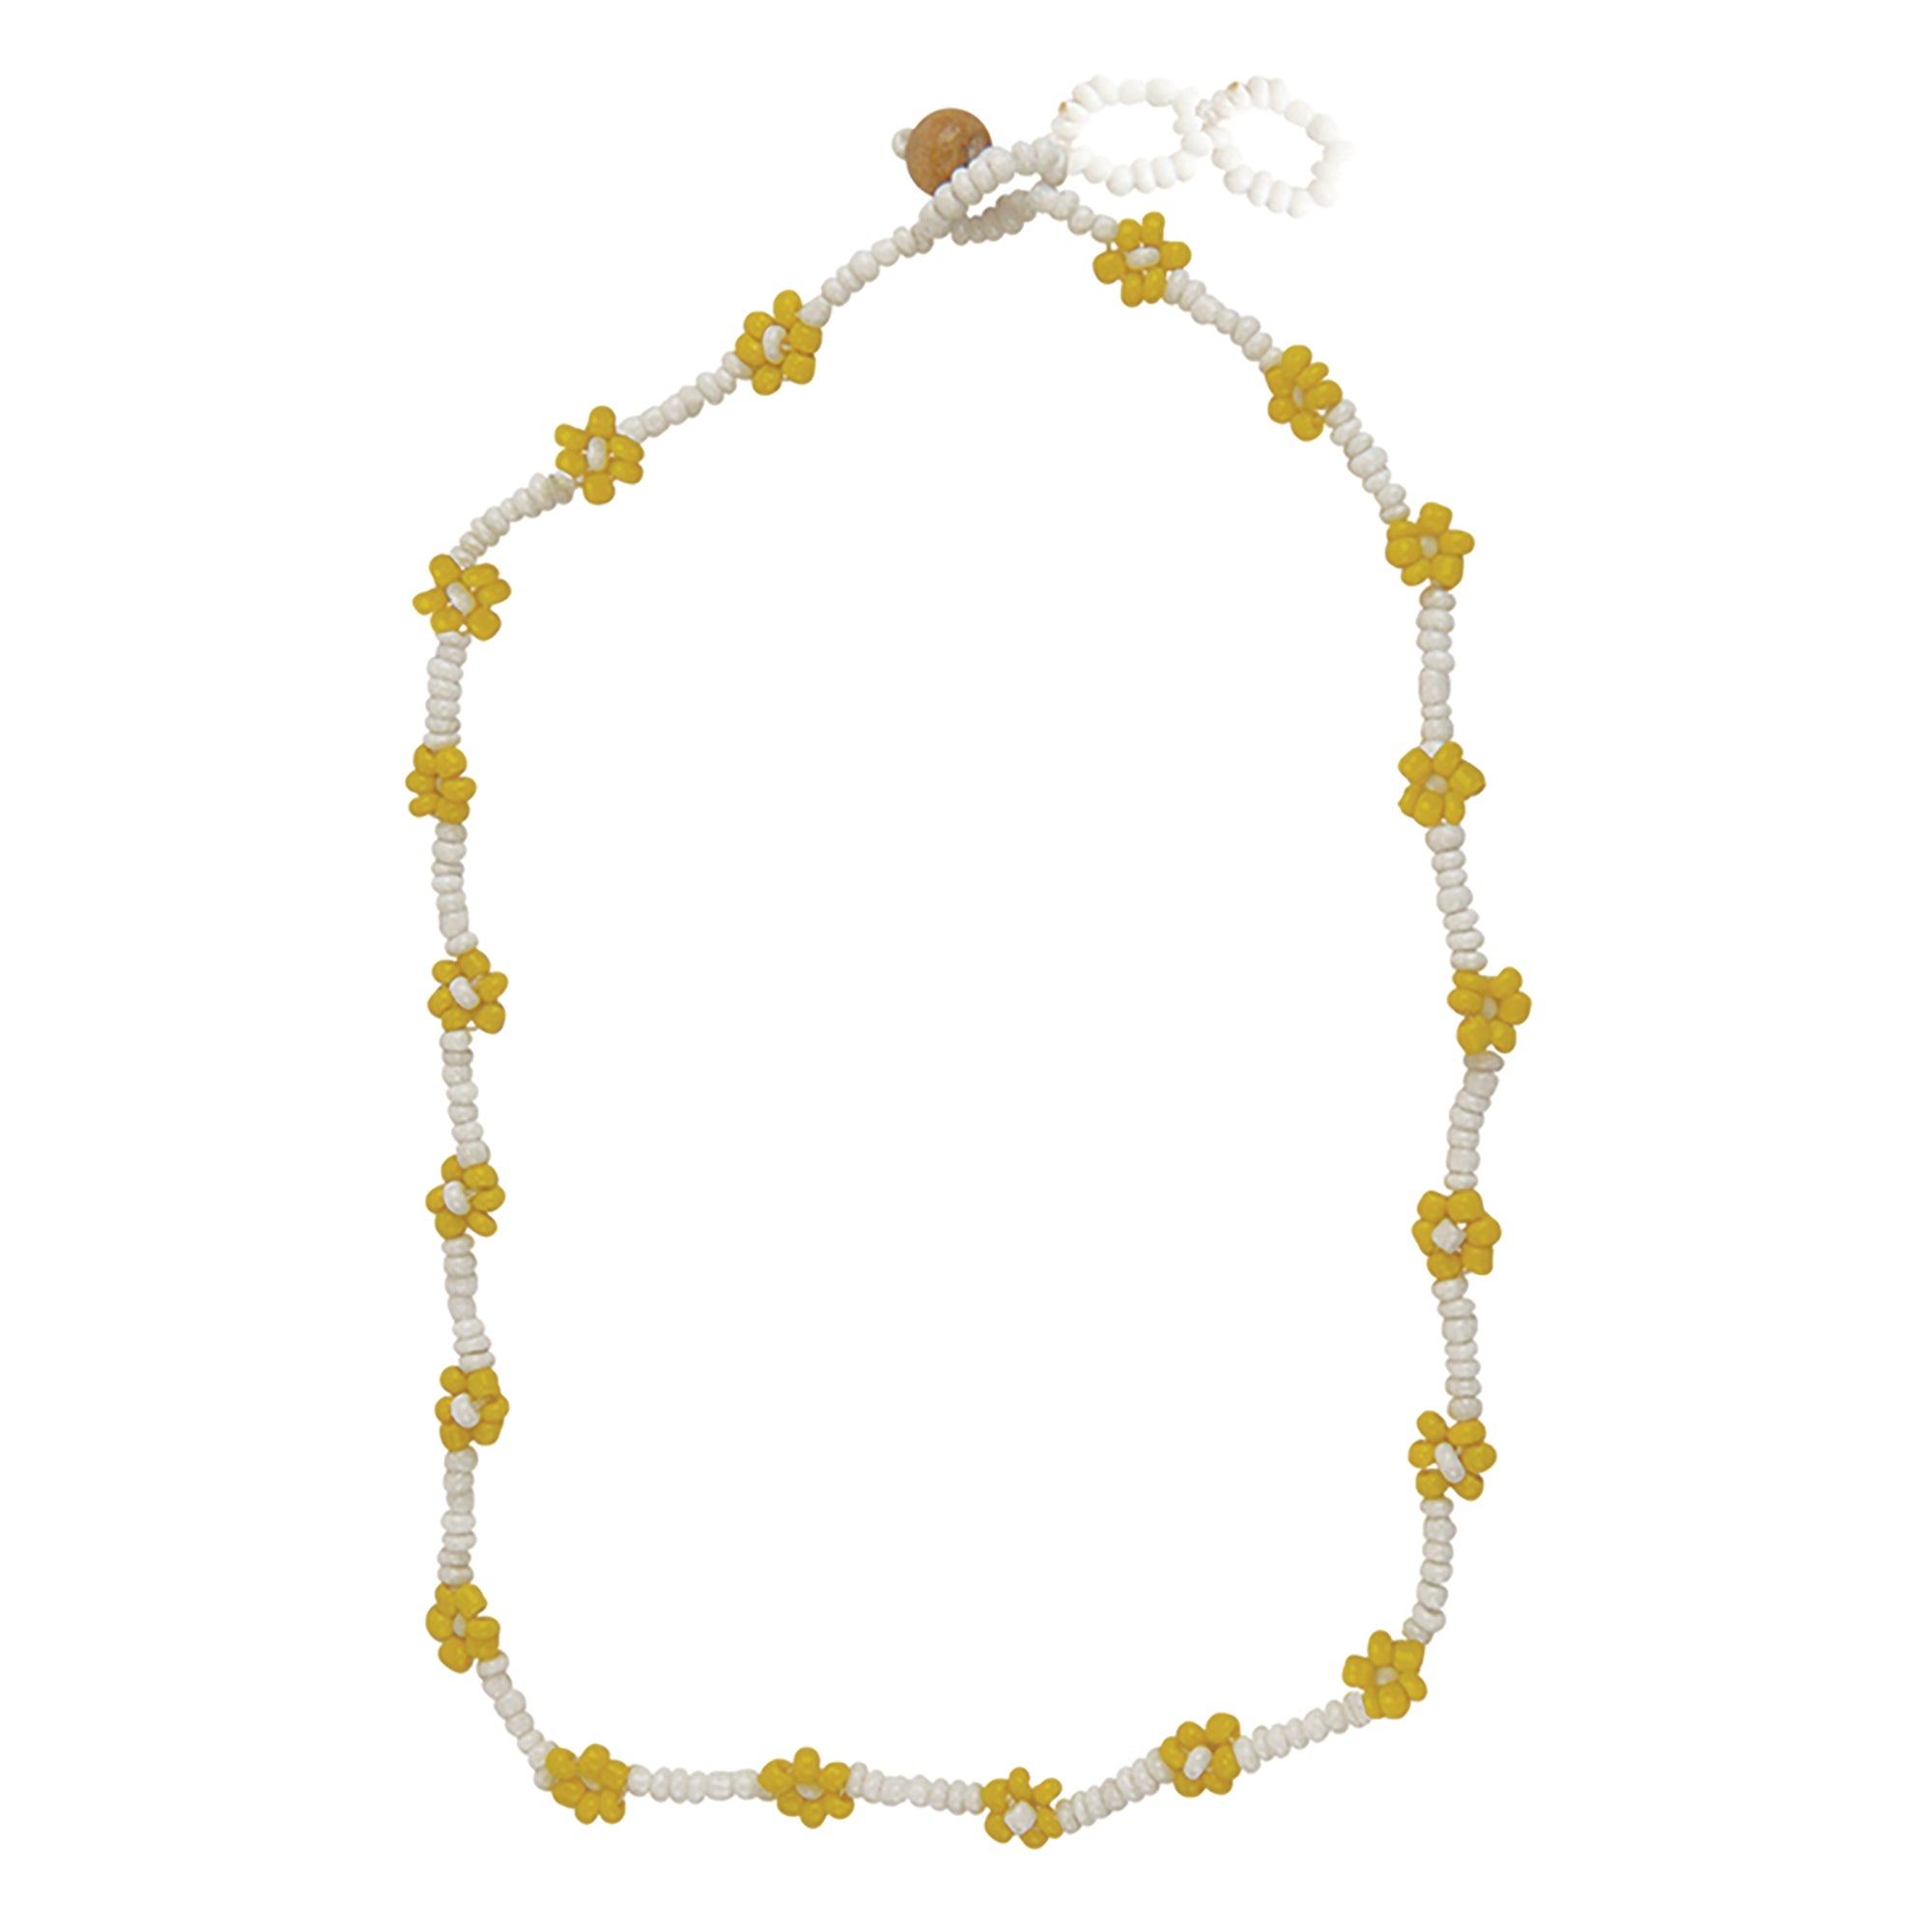 Sunset Seed Bead Handmade Necklace - VivaLife Jewelry